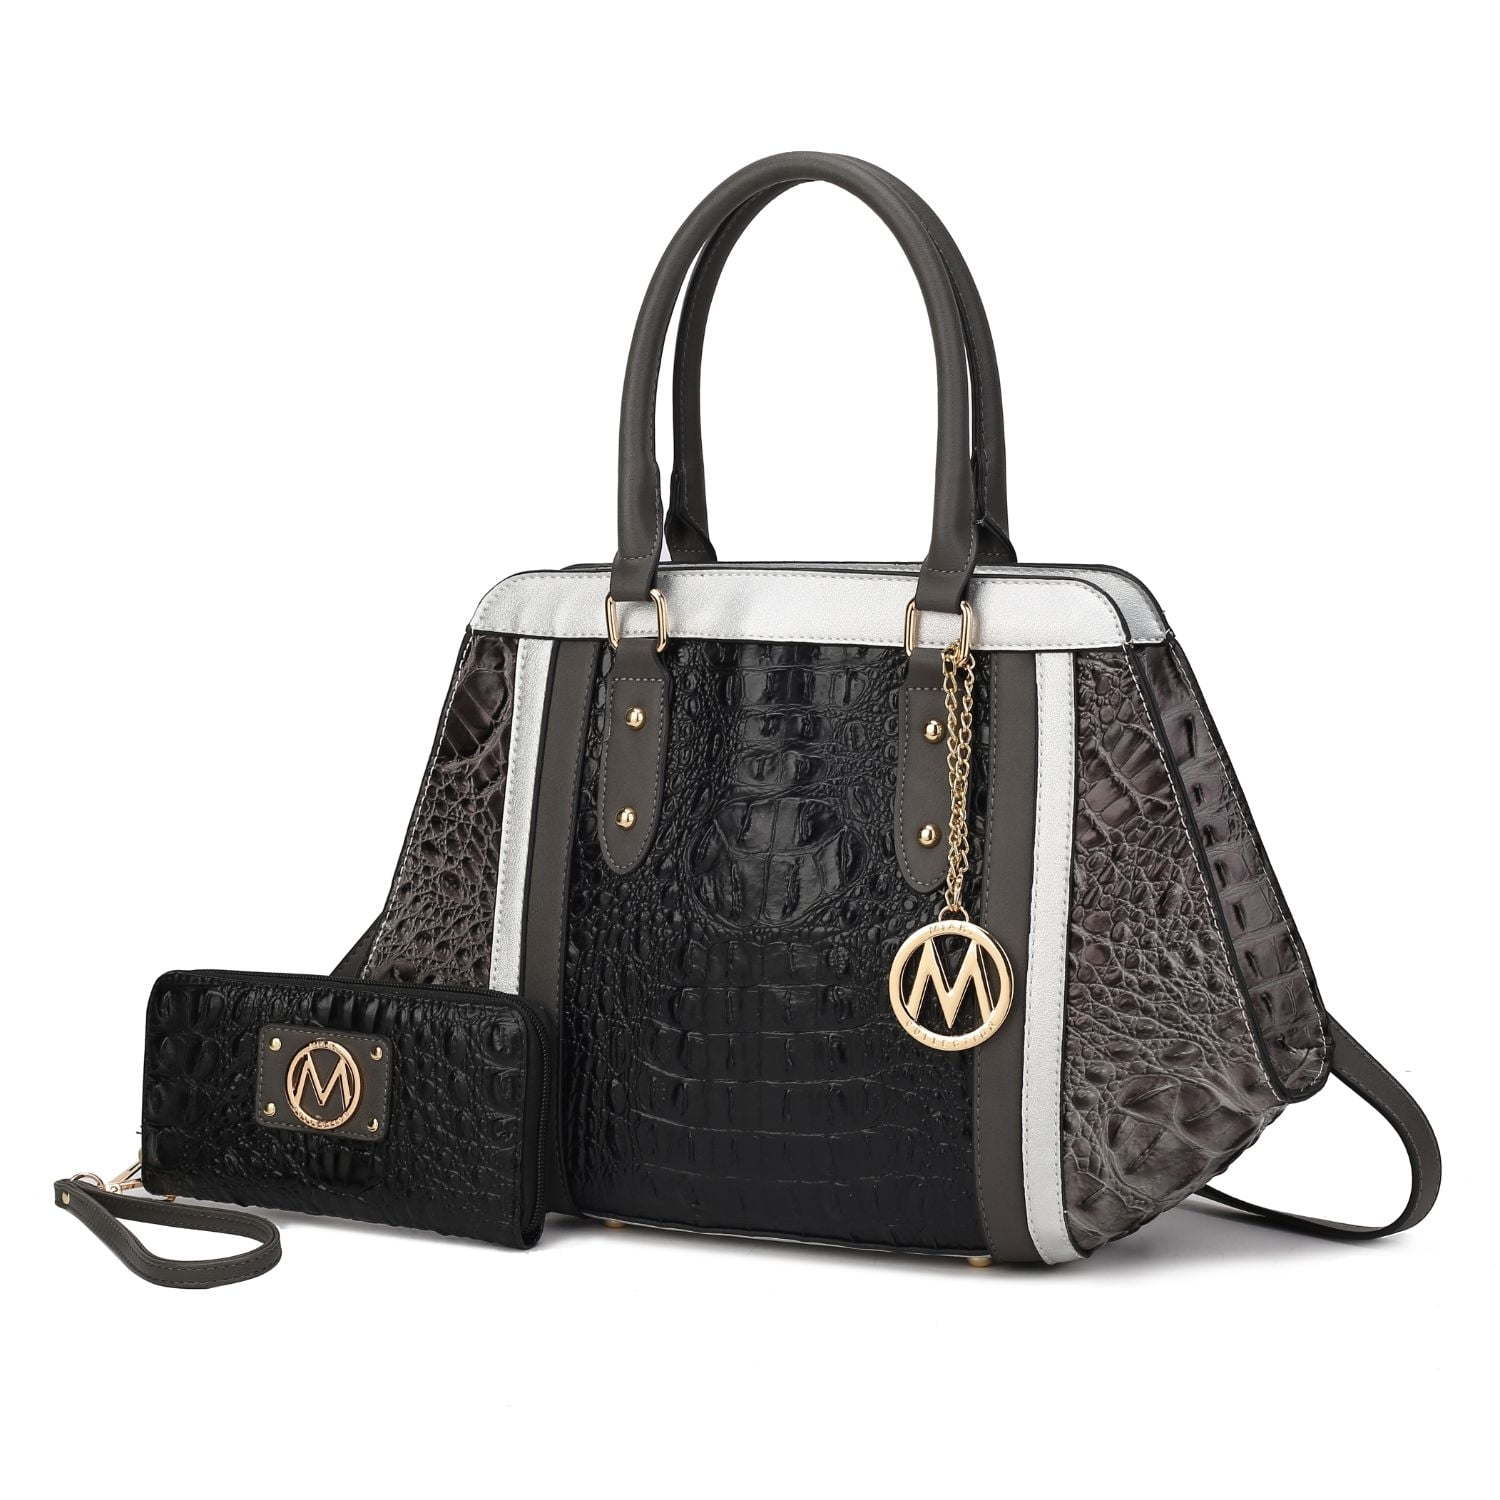 MKF Collection - Daisy Croco Satchel Handbag & Wristlet Wallet Set 2 pcs by Mia K - Charcoal Gray 3P's Inclusive Beauty